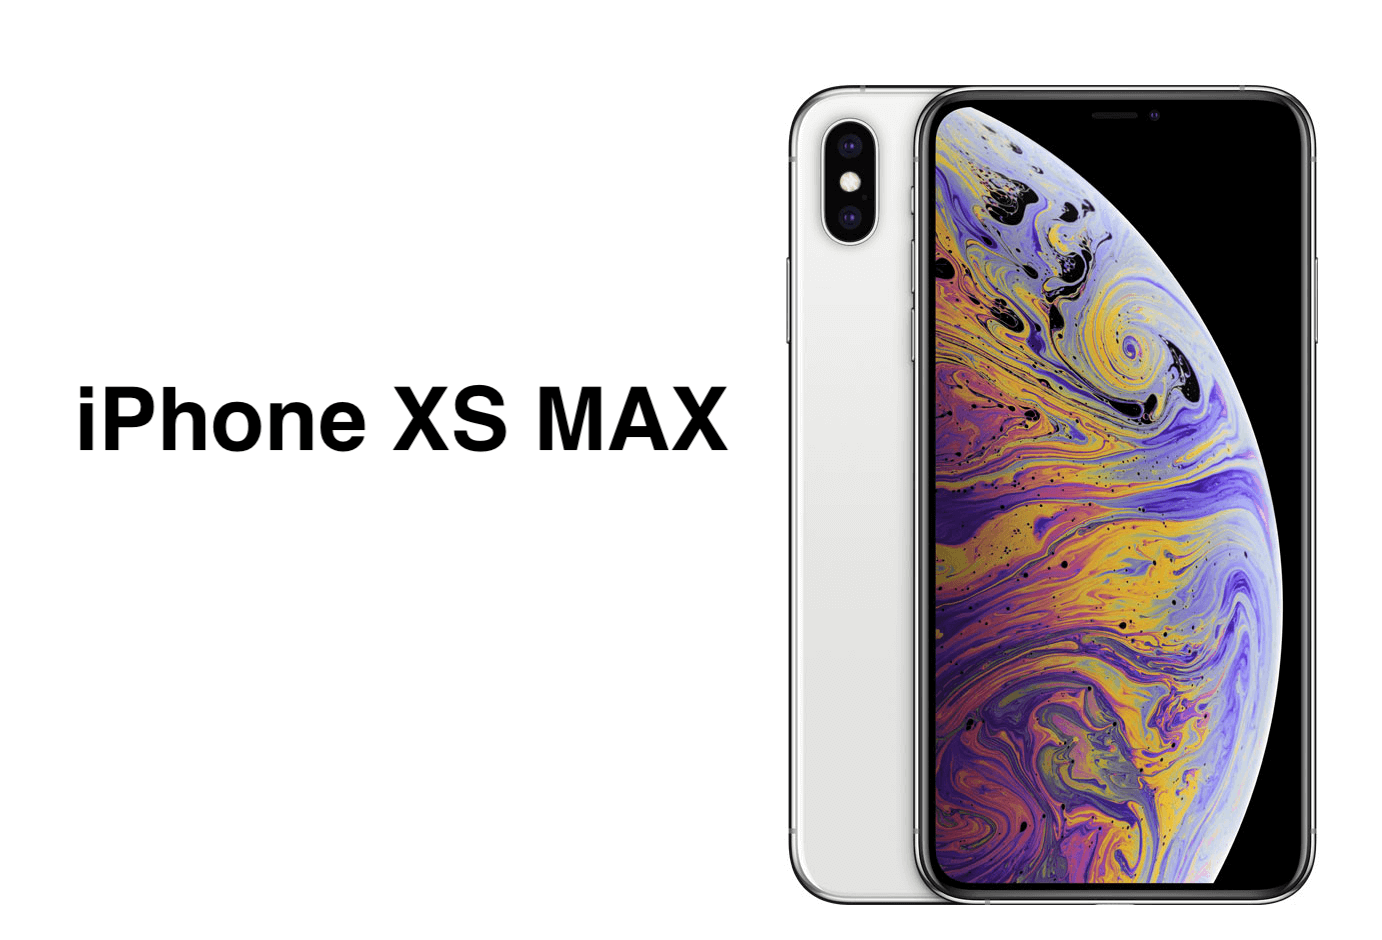 iPhone XS MAX image